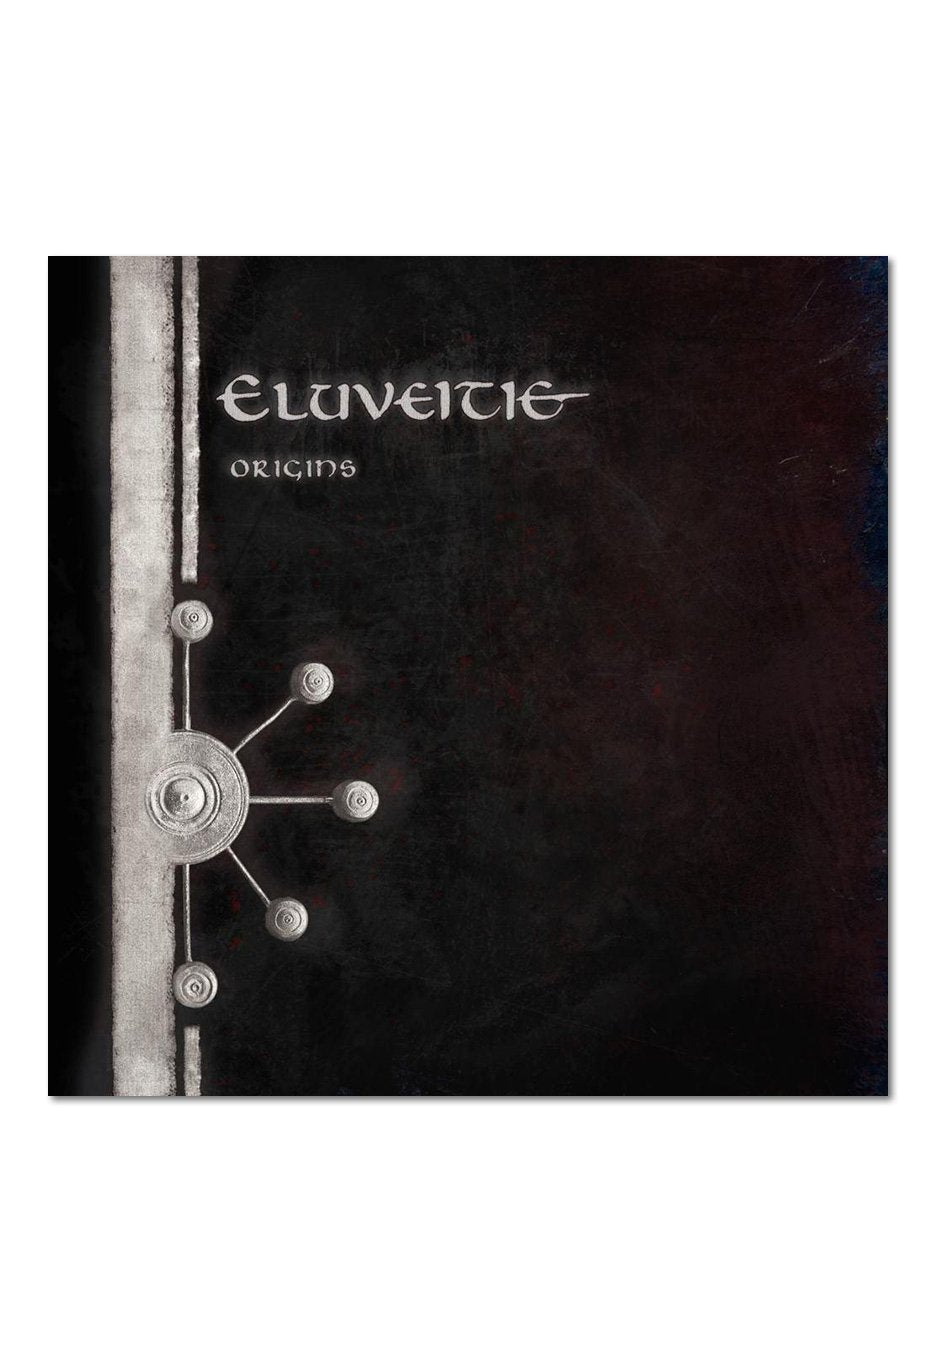 Eluveitie - Origins - Digipak CD + DVD